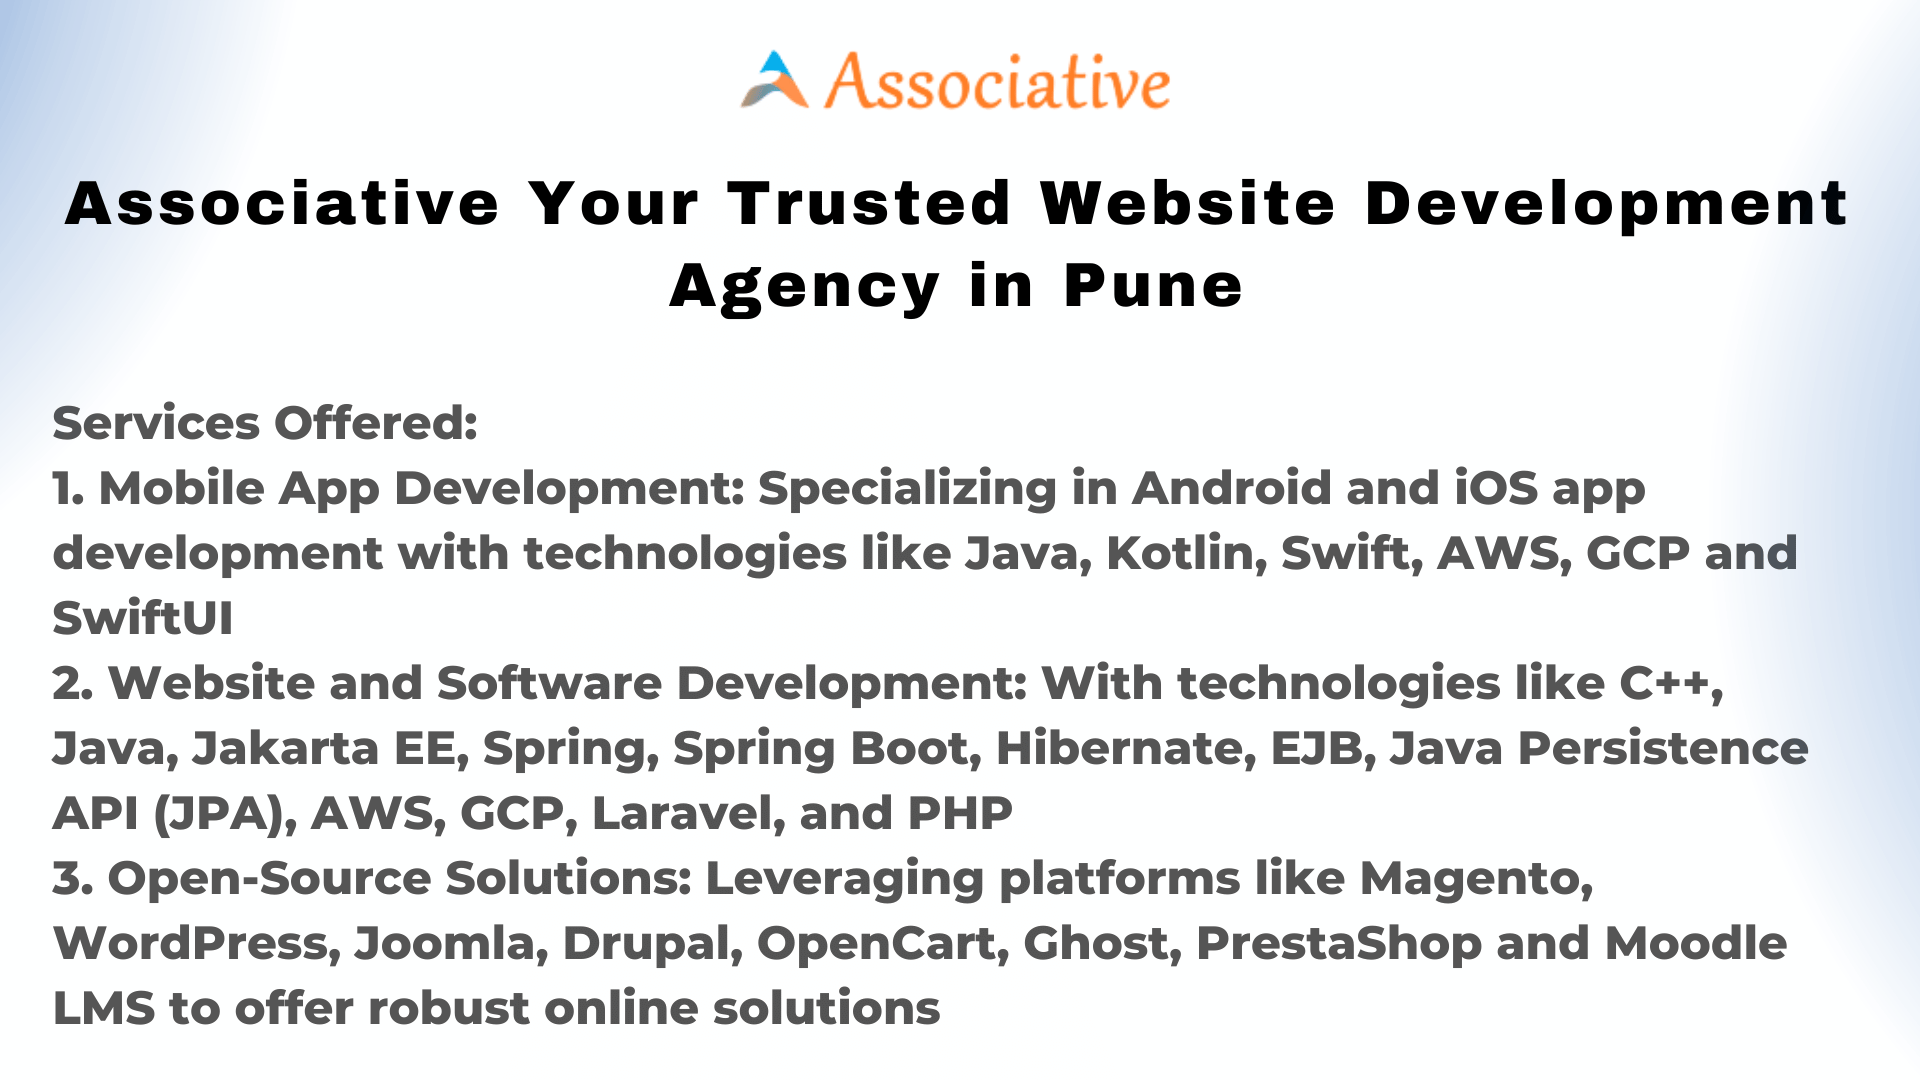 Associative Your Trusted Website Development Agency in Pune